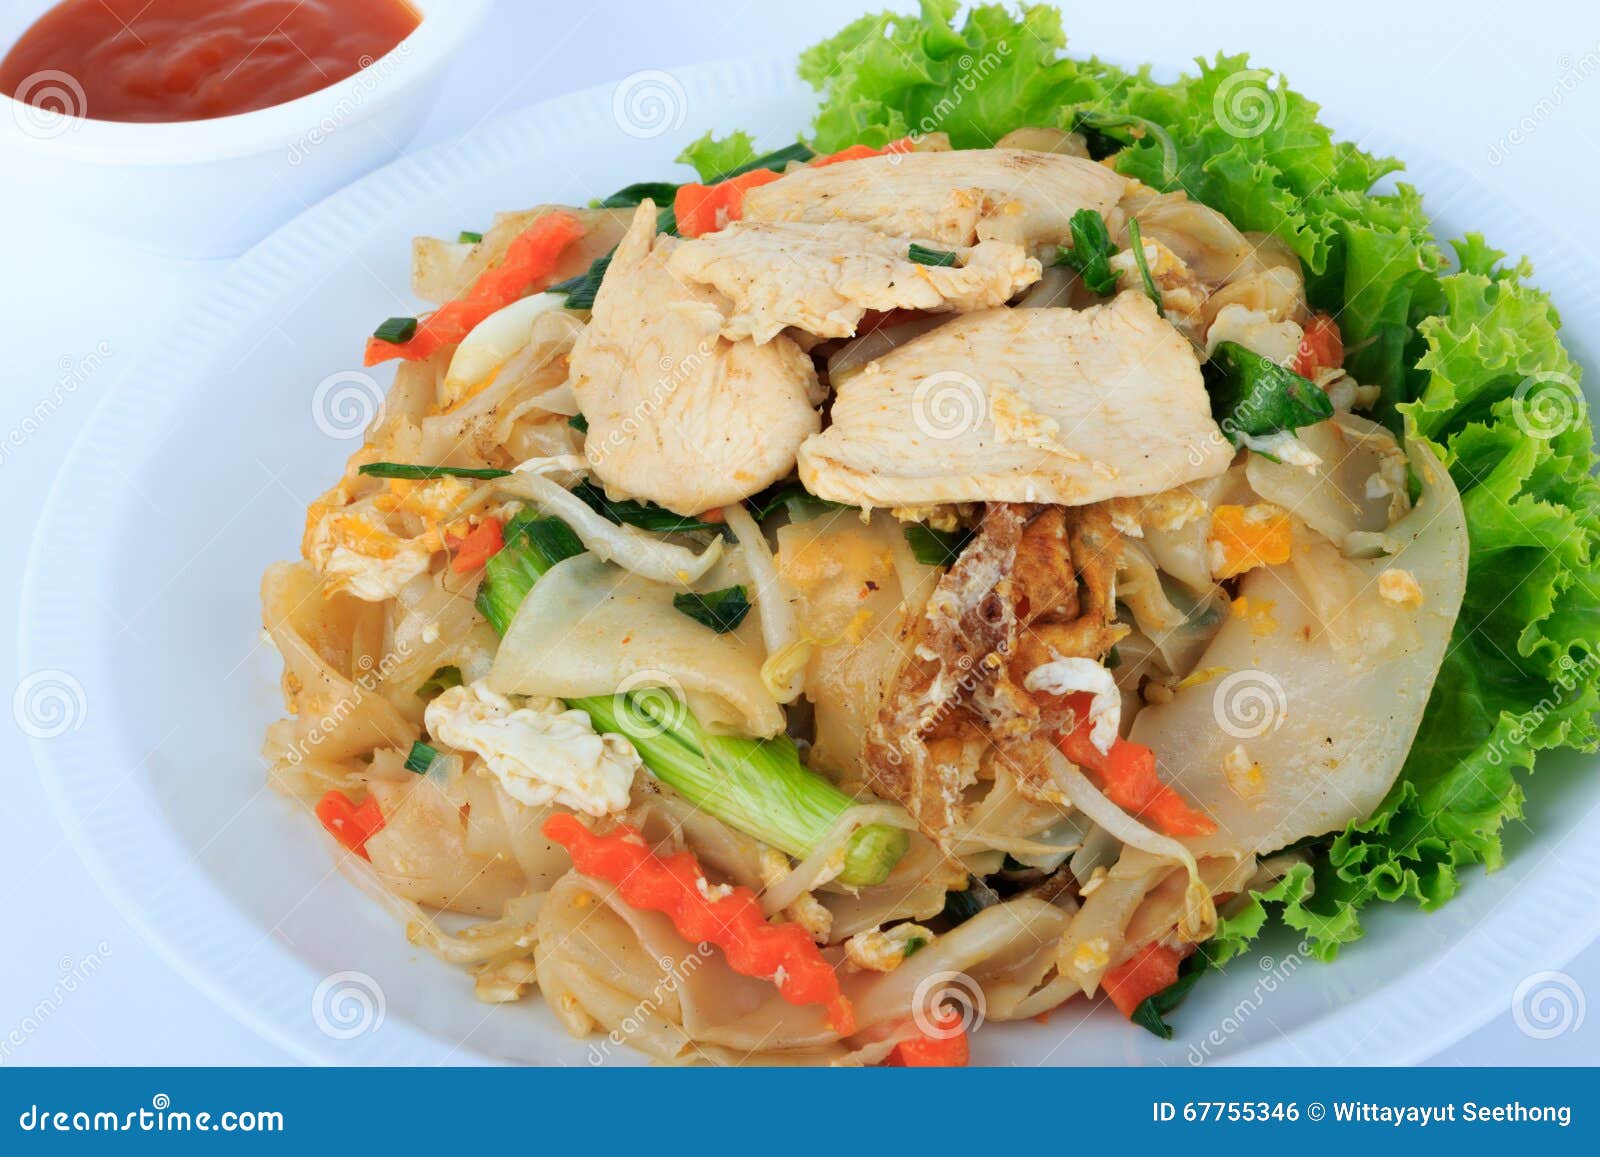 rice noodles stir-fried with chicken. thai street food.